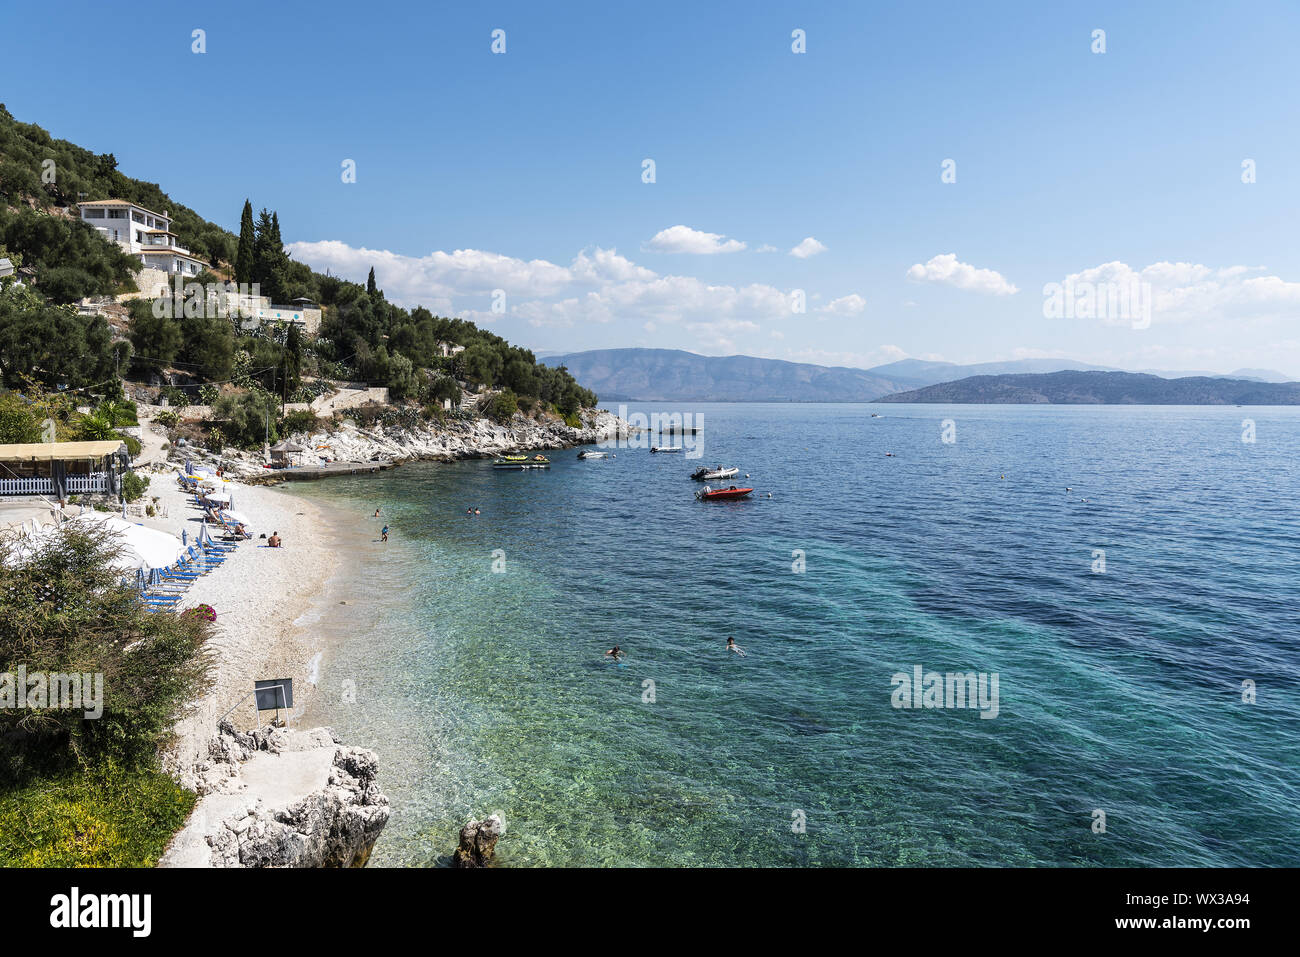 Kaminaki beach, Nissaki, Corfu, Greece, Europe Stock Photo